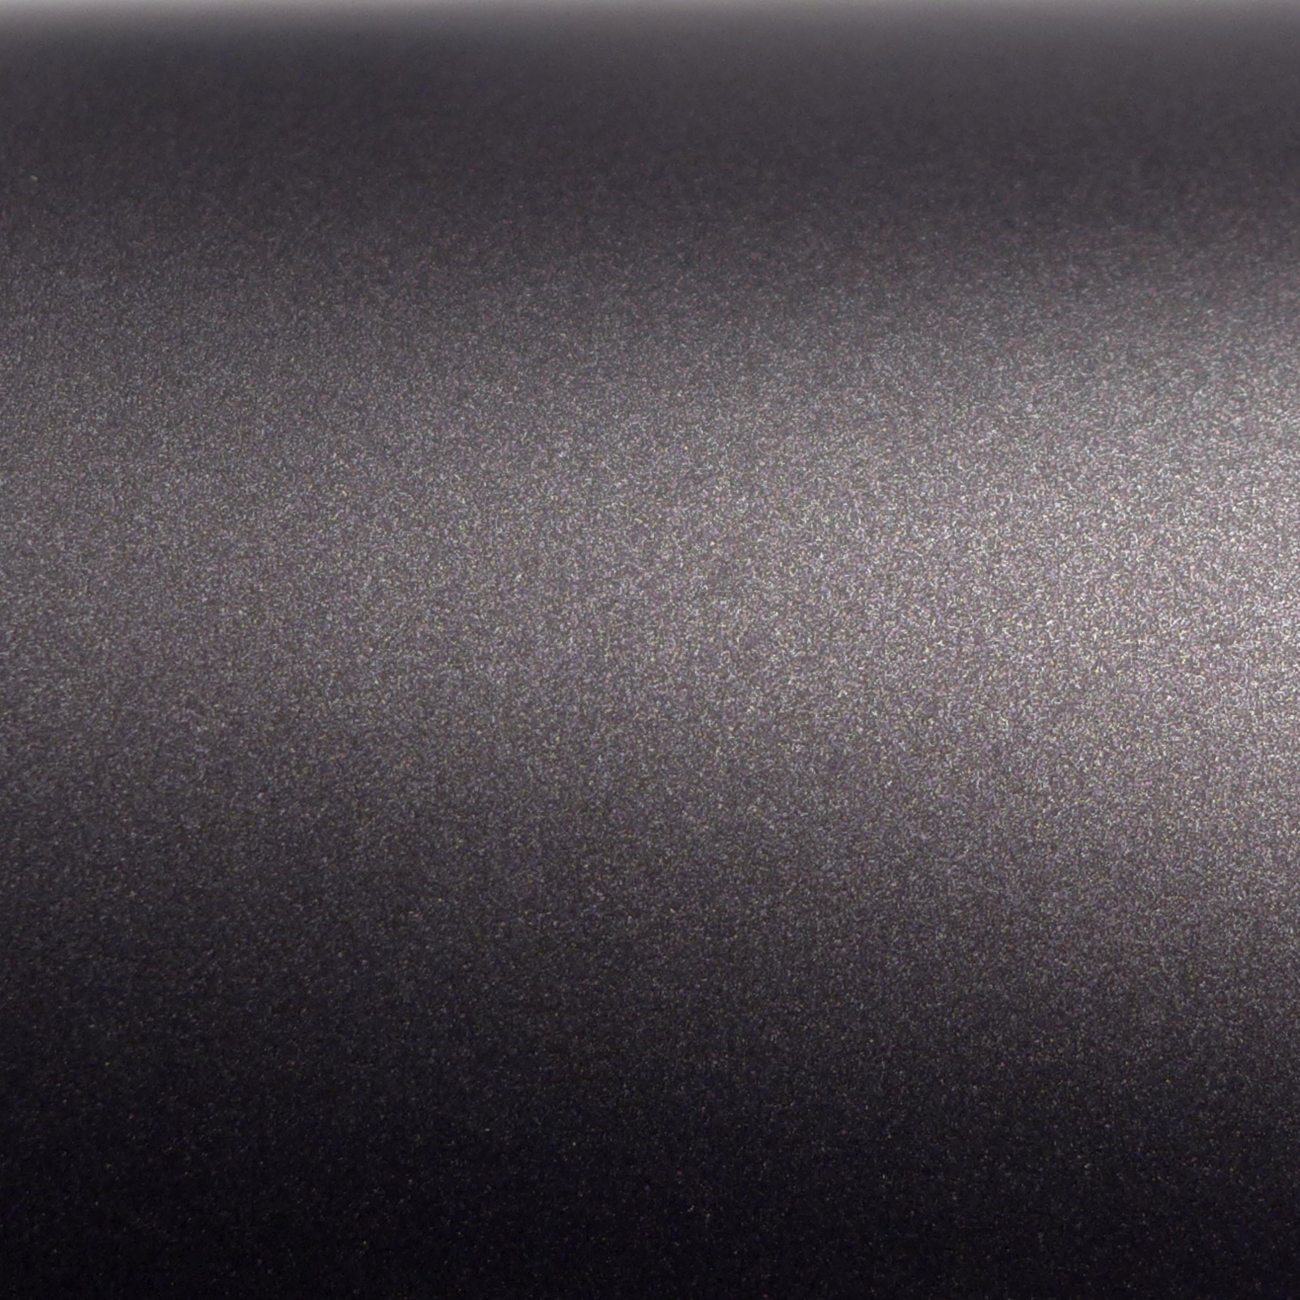 3M Wrap Film 2080-M211, metallizzato carbone opaco, 1524 mm x 25 m